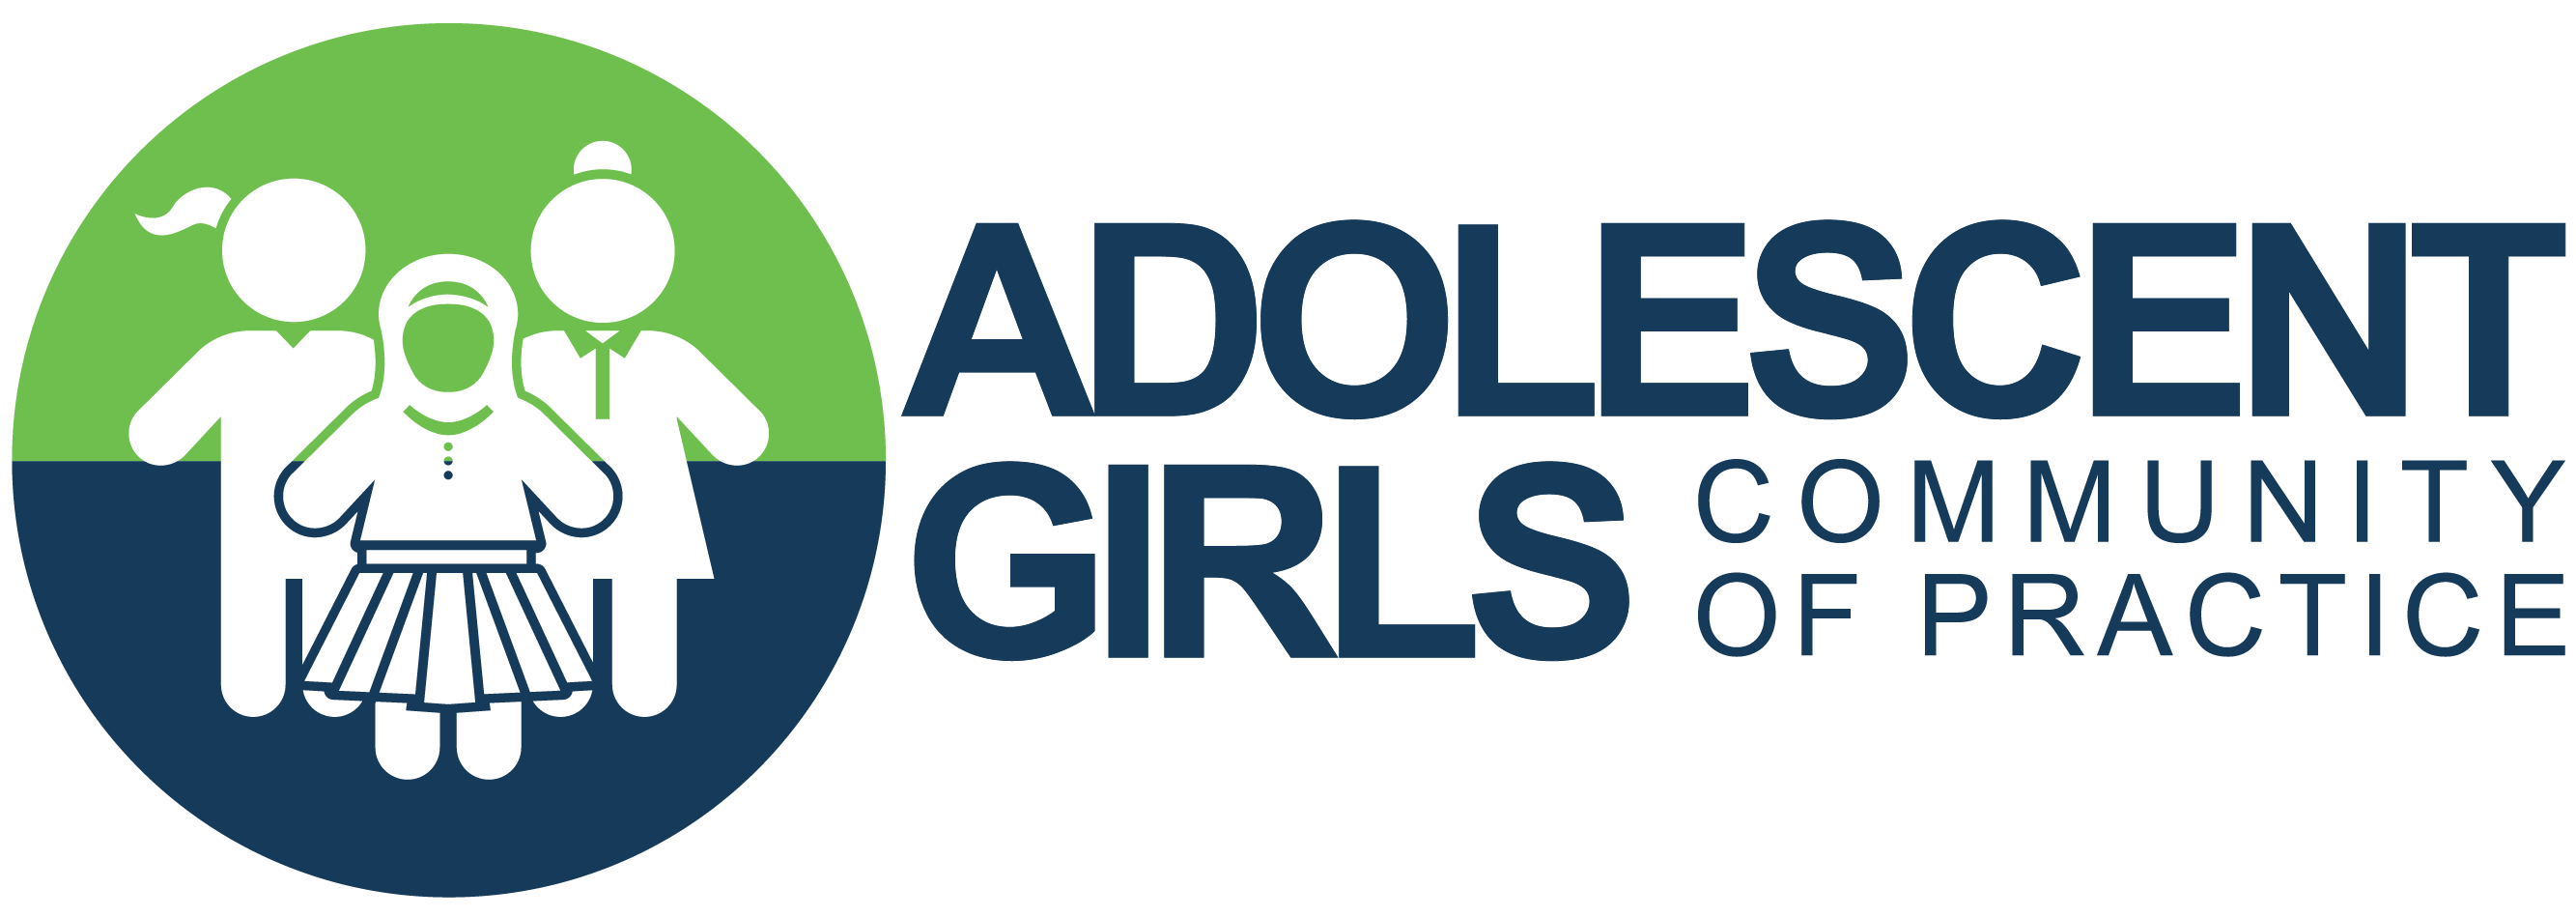 Adolescent Girls Community of Practice